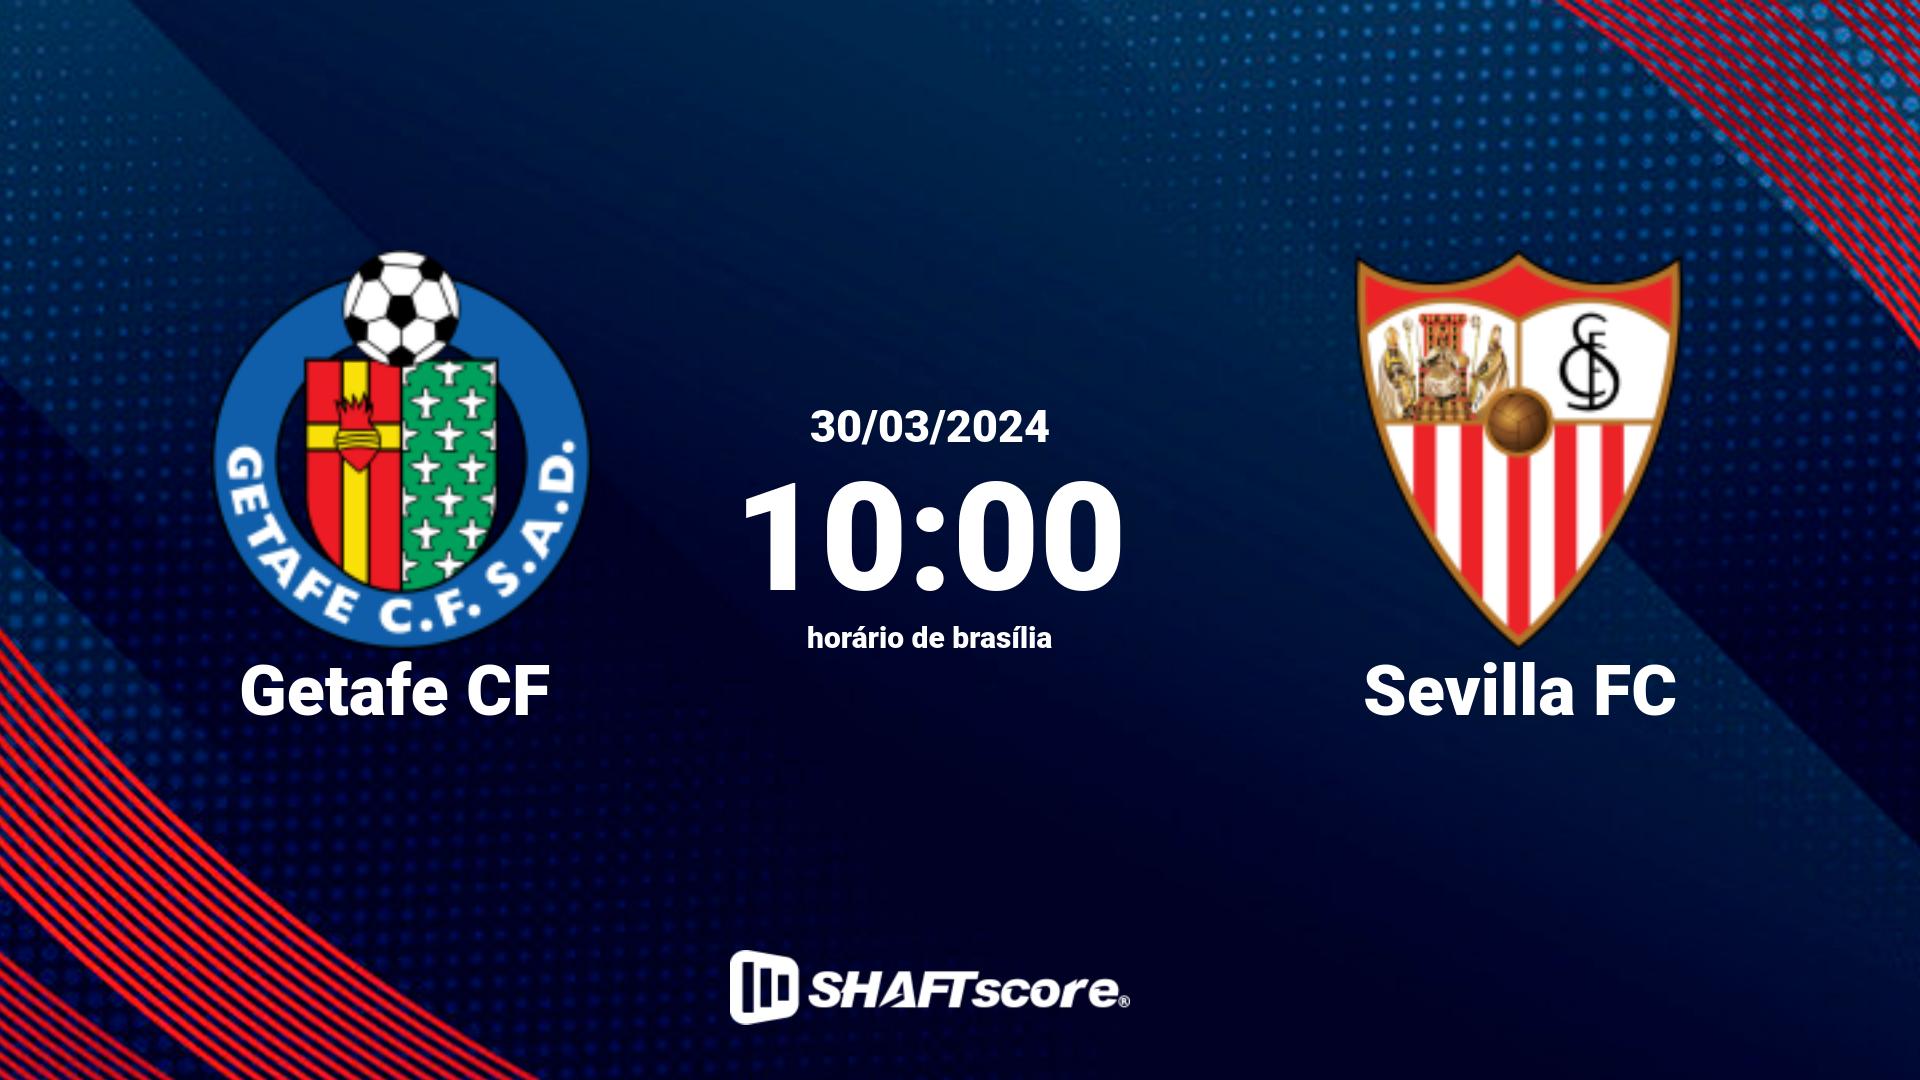 Estatísticas do jogo Getafe CF vs Sevilla FC 30.03 10:00